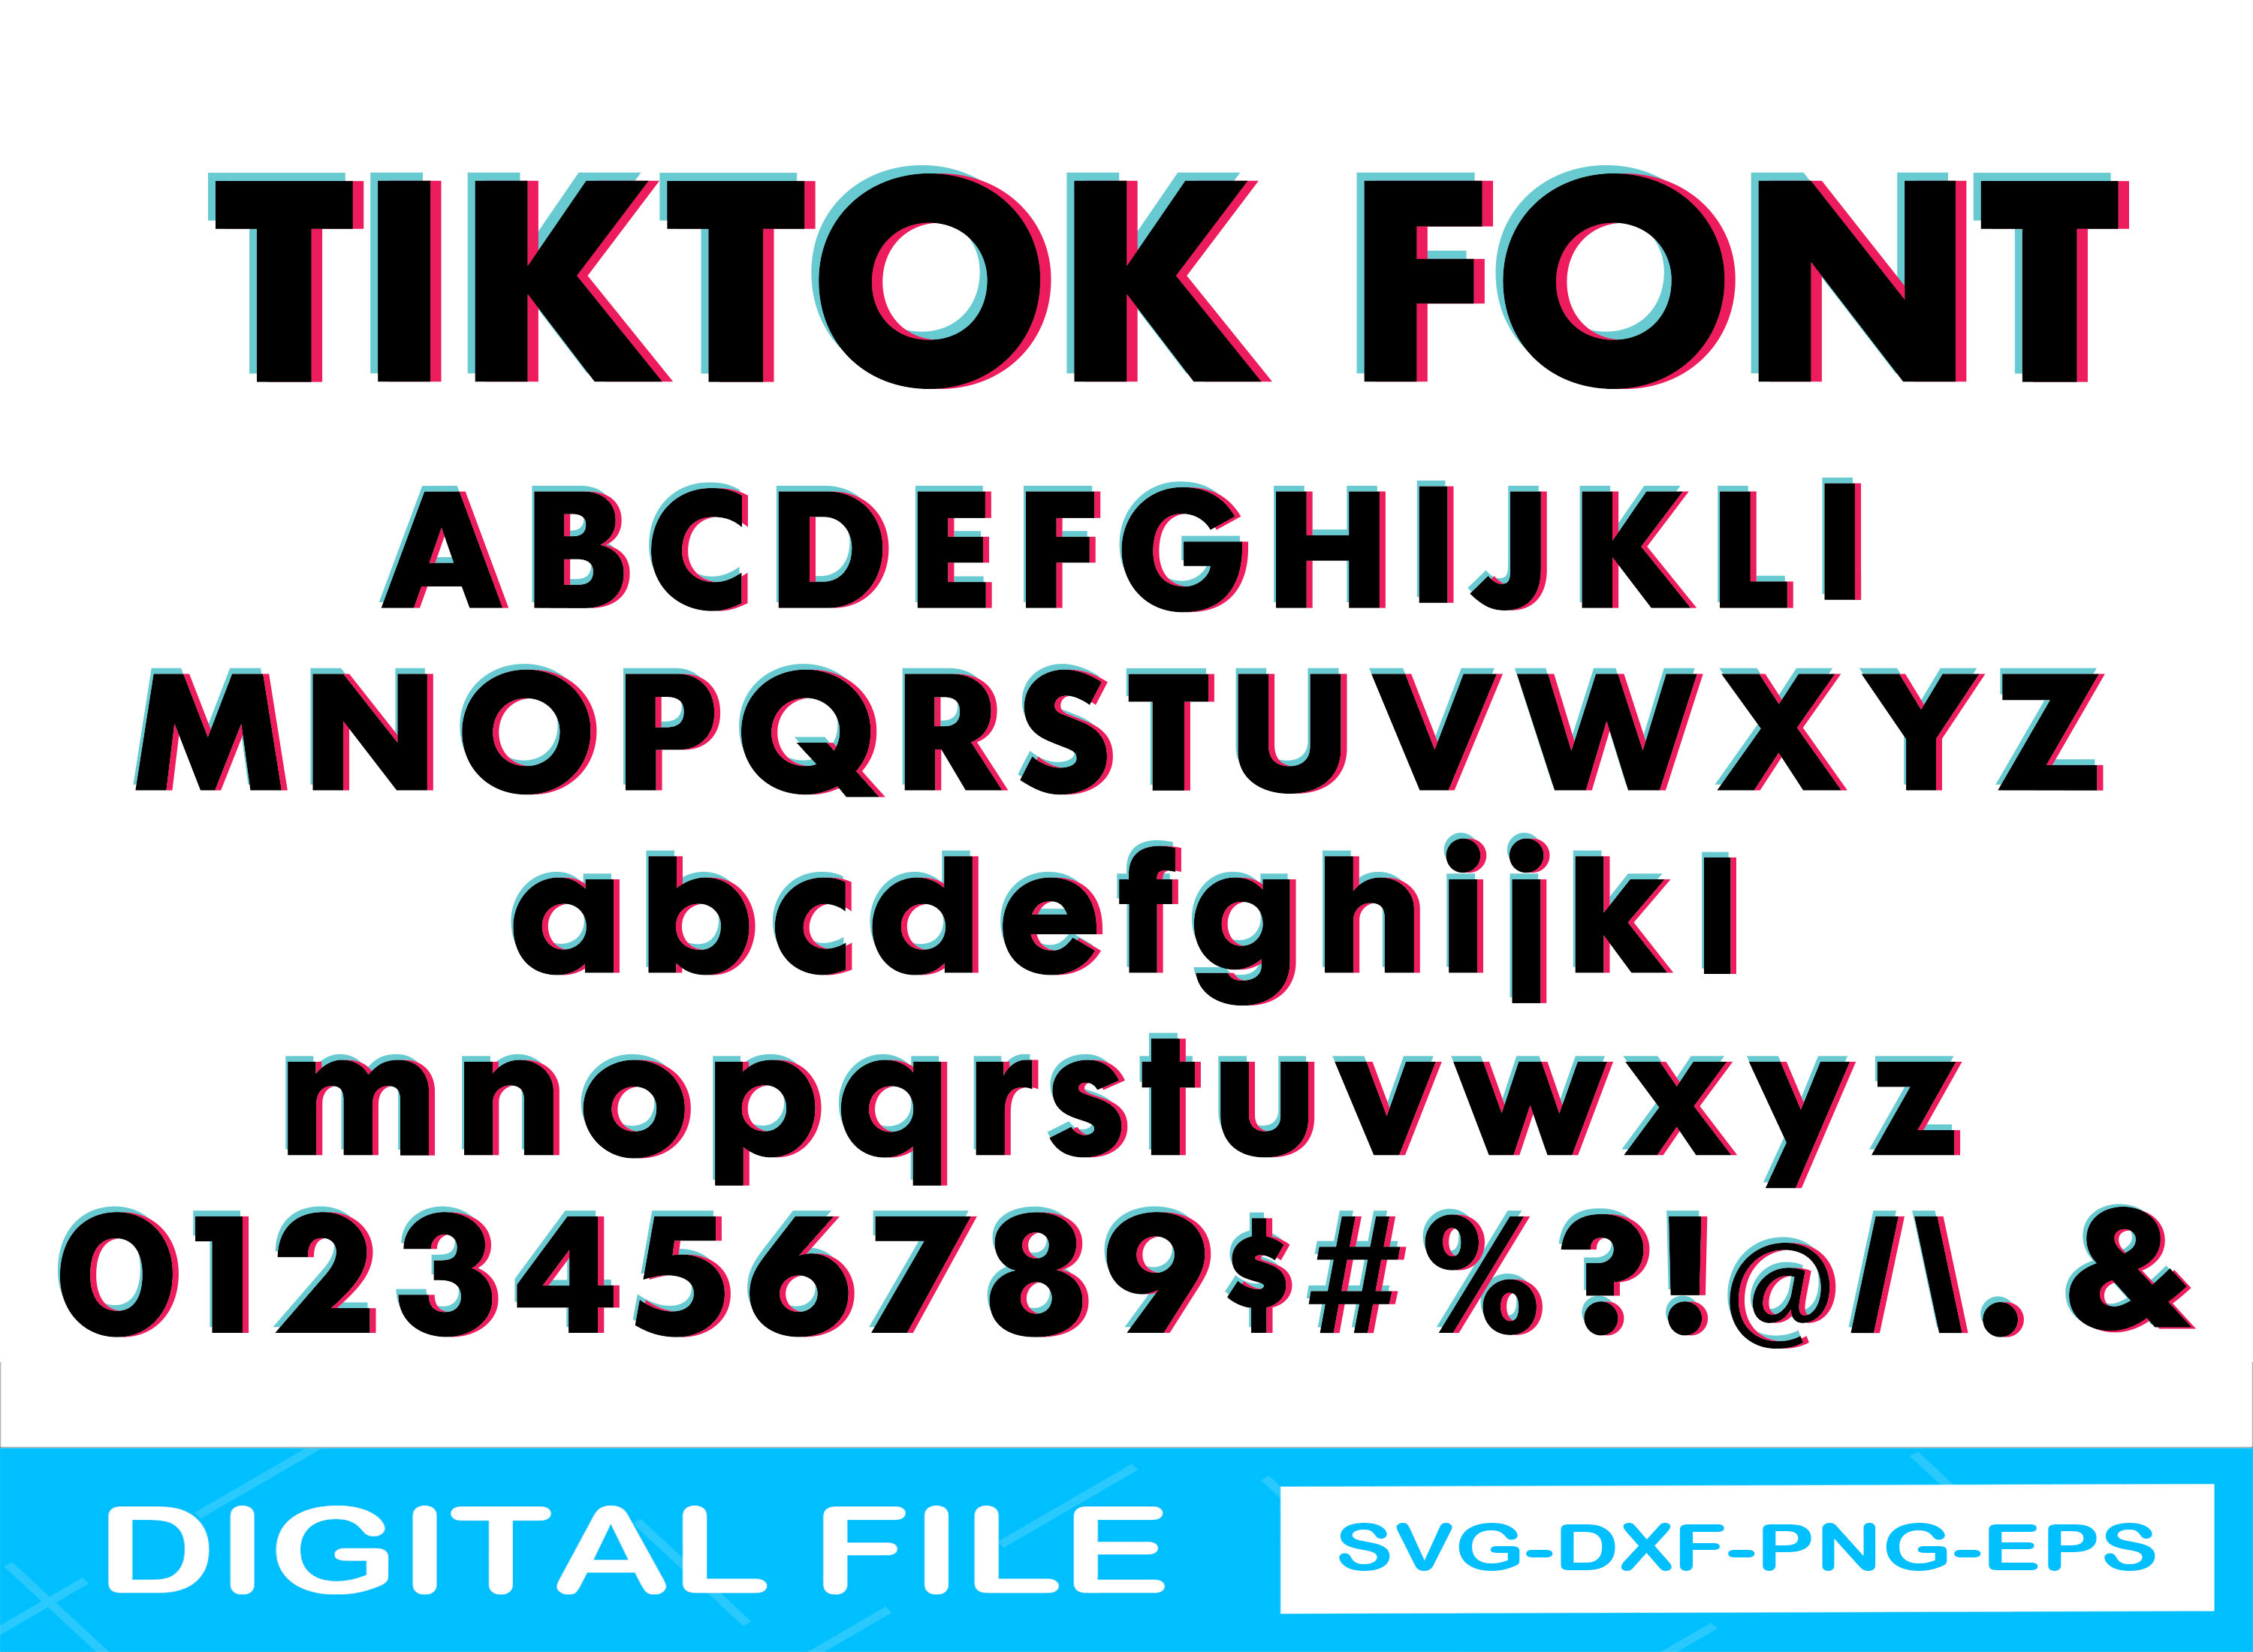 cover letter for tiktok content creator